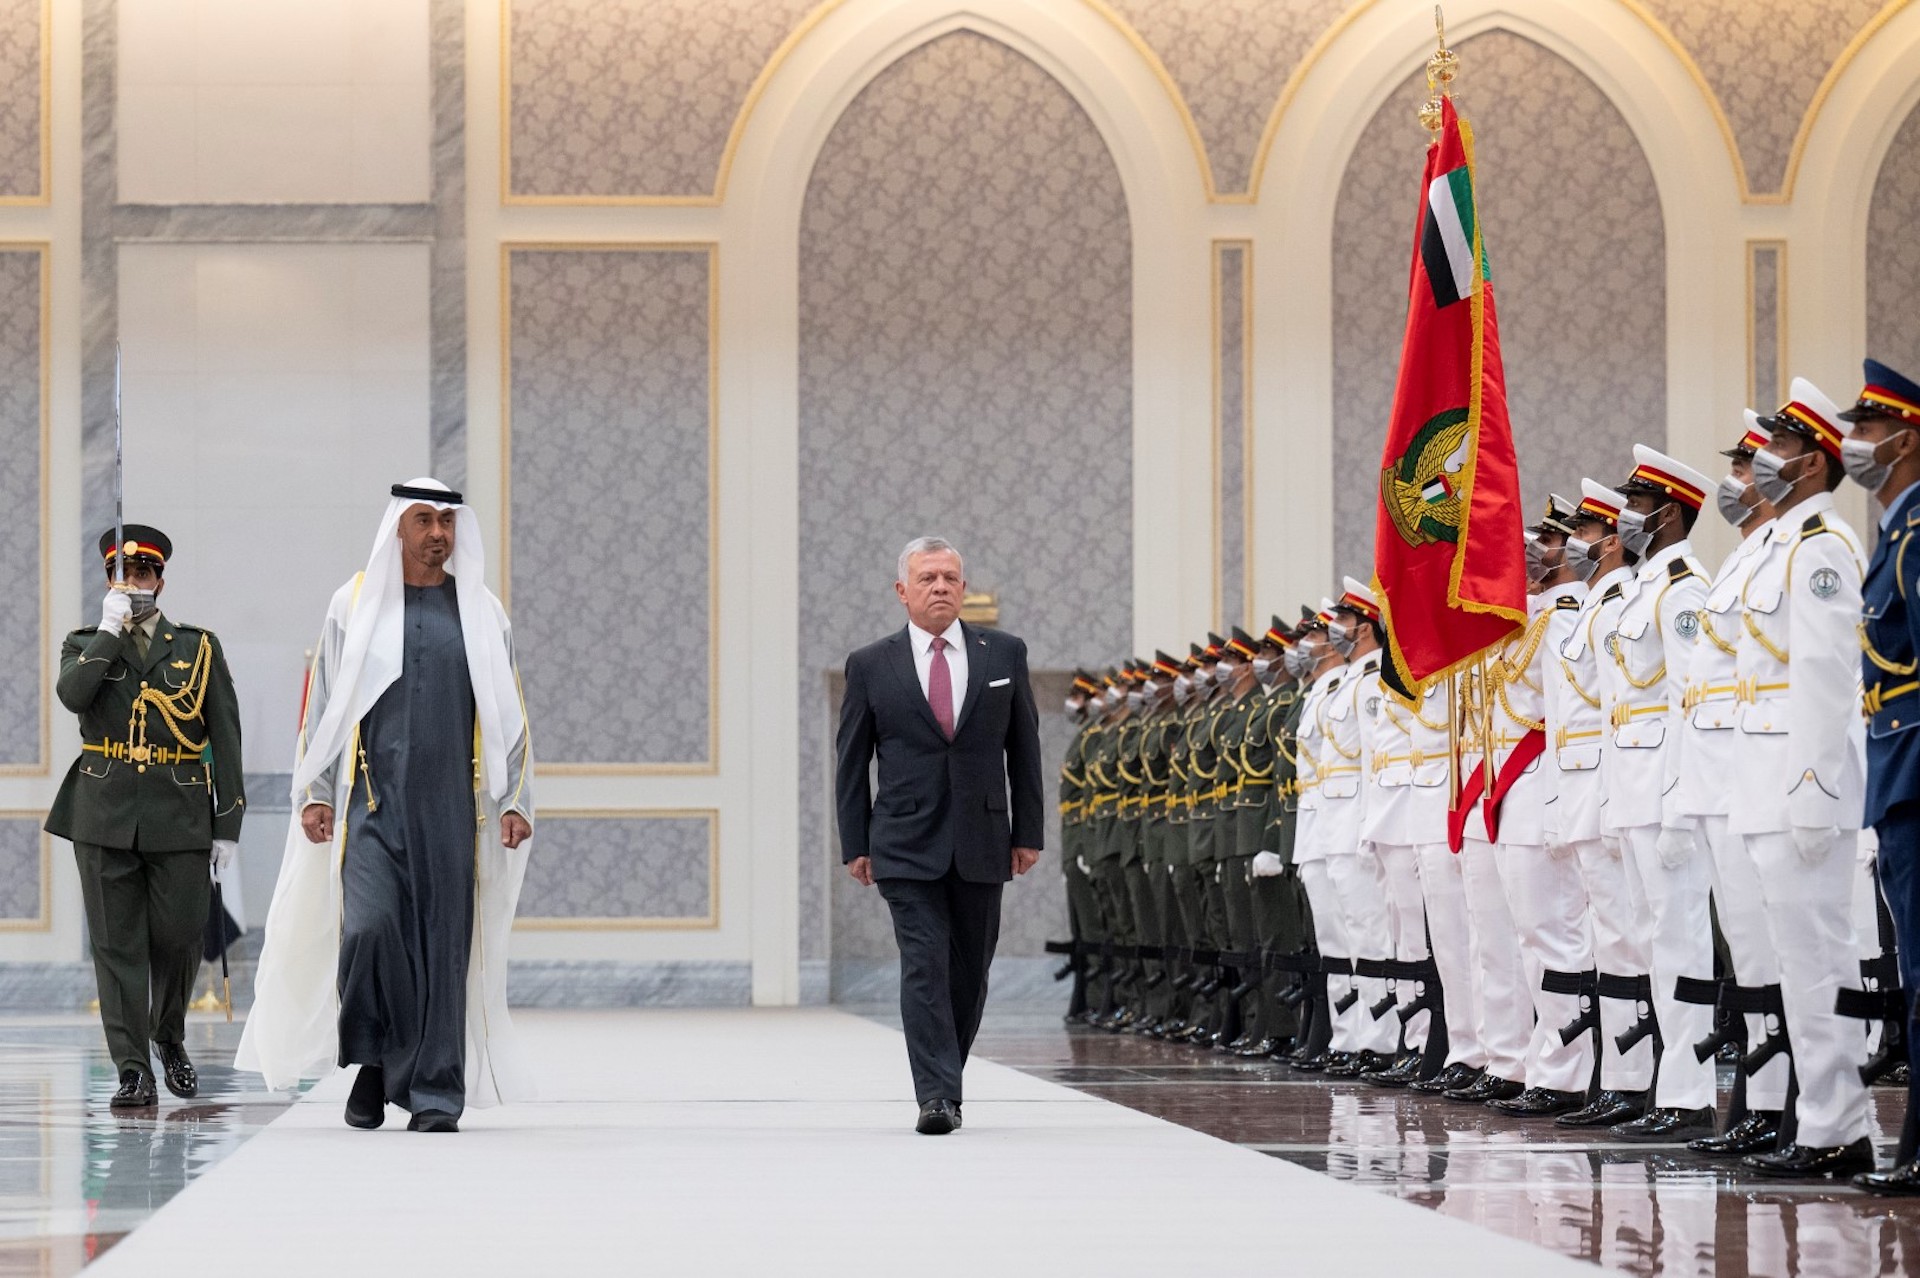 Jordan royalty arrive in the UAE on a state visit